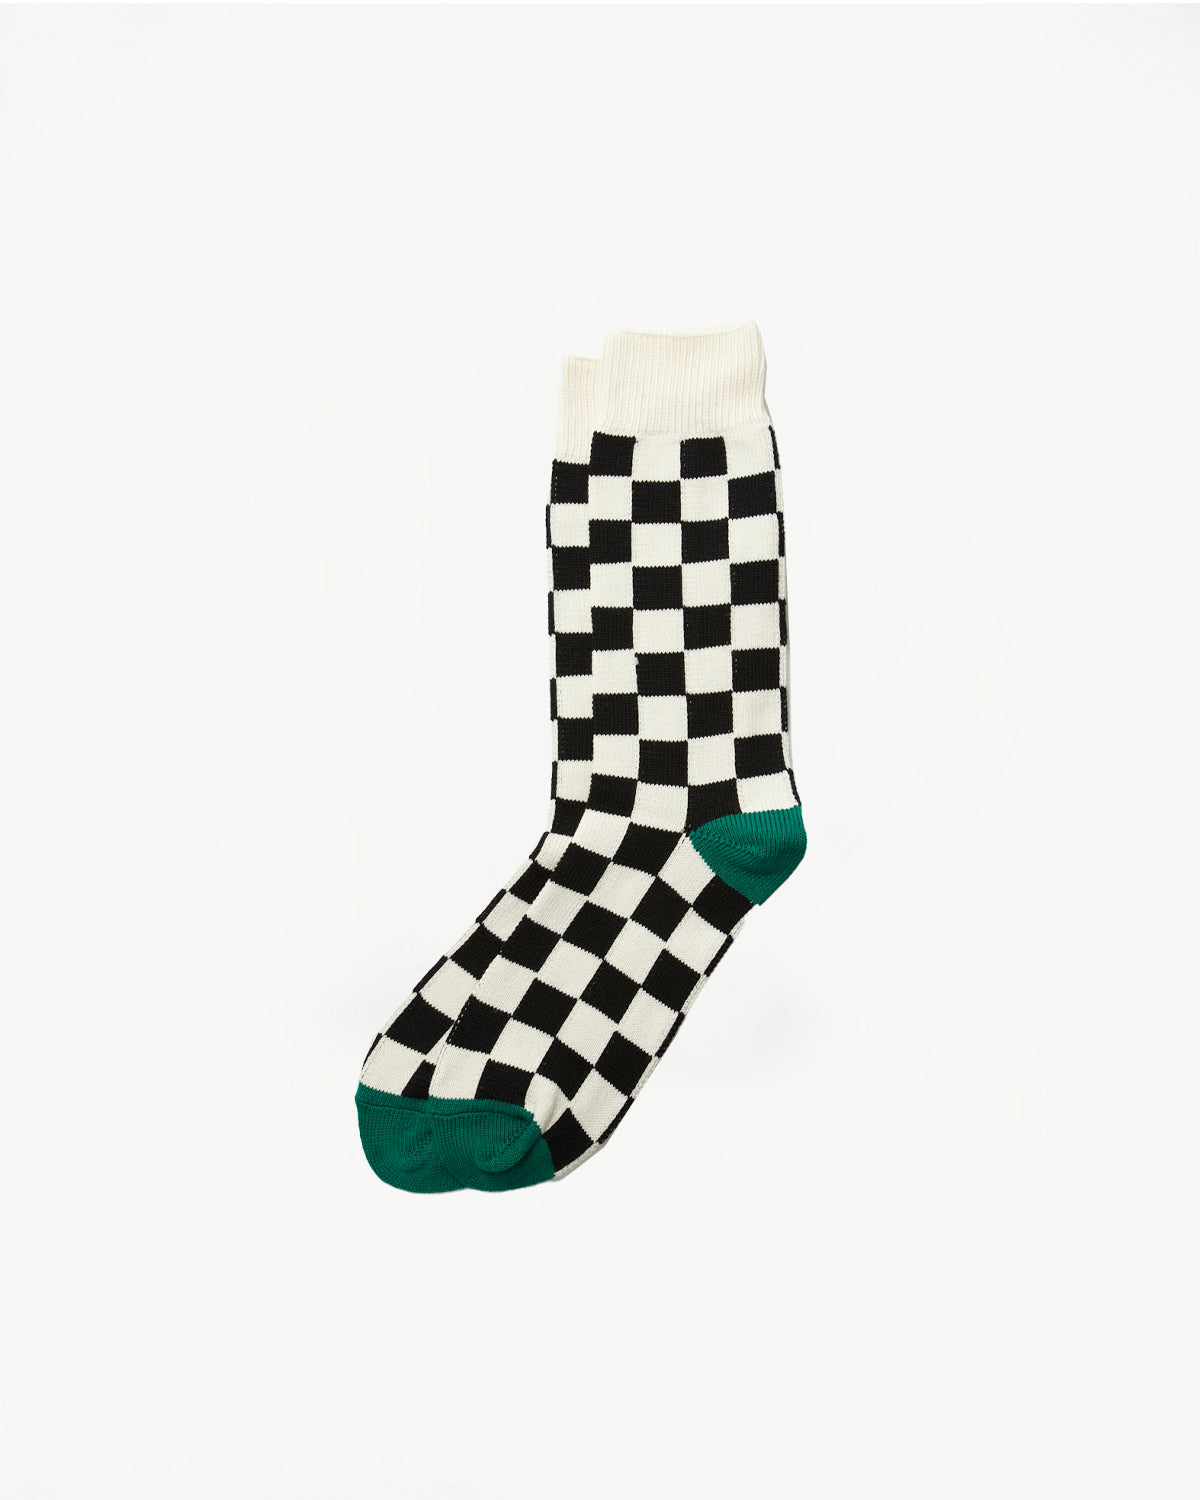 R1495 - Checkerboard Crew Socks - Ivory, Black, Green